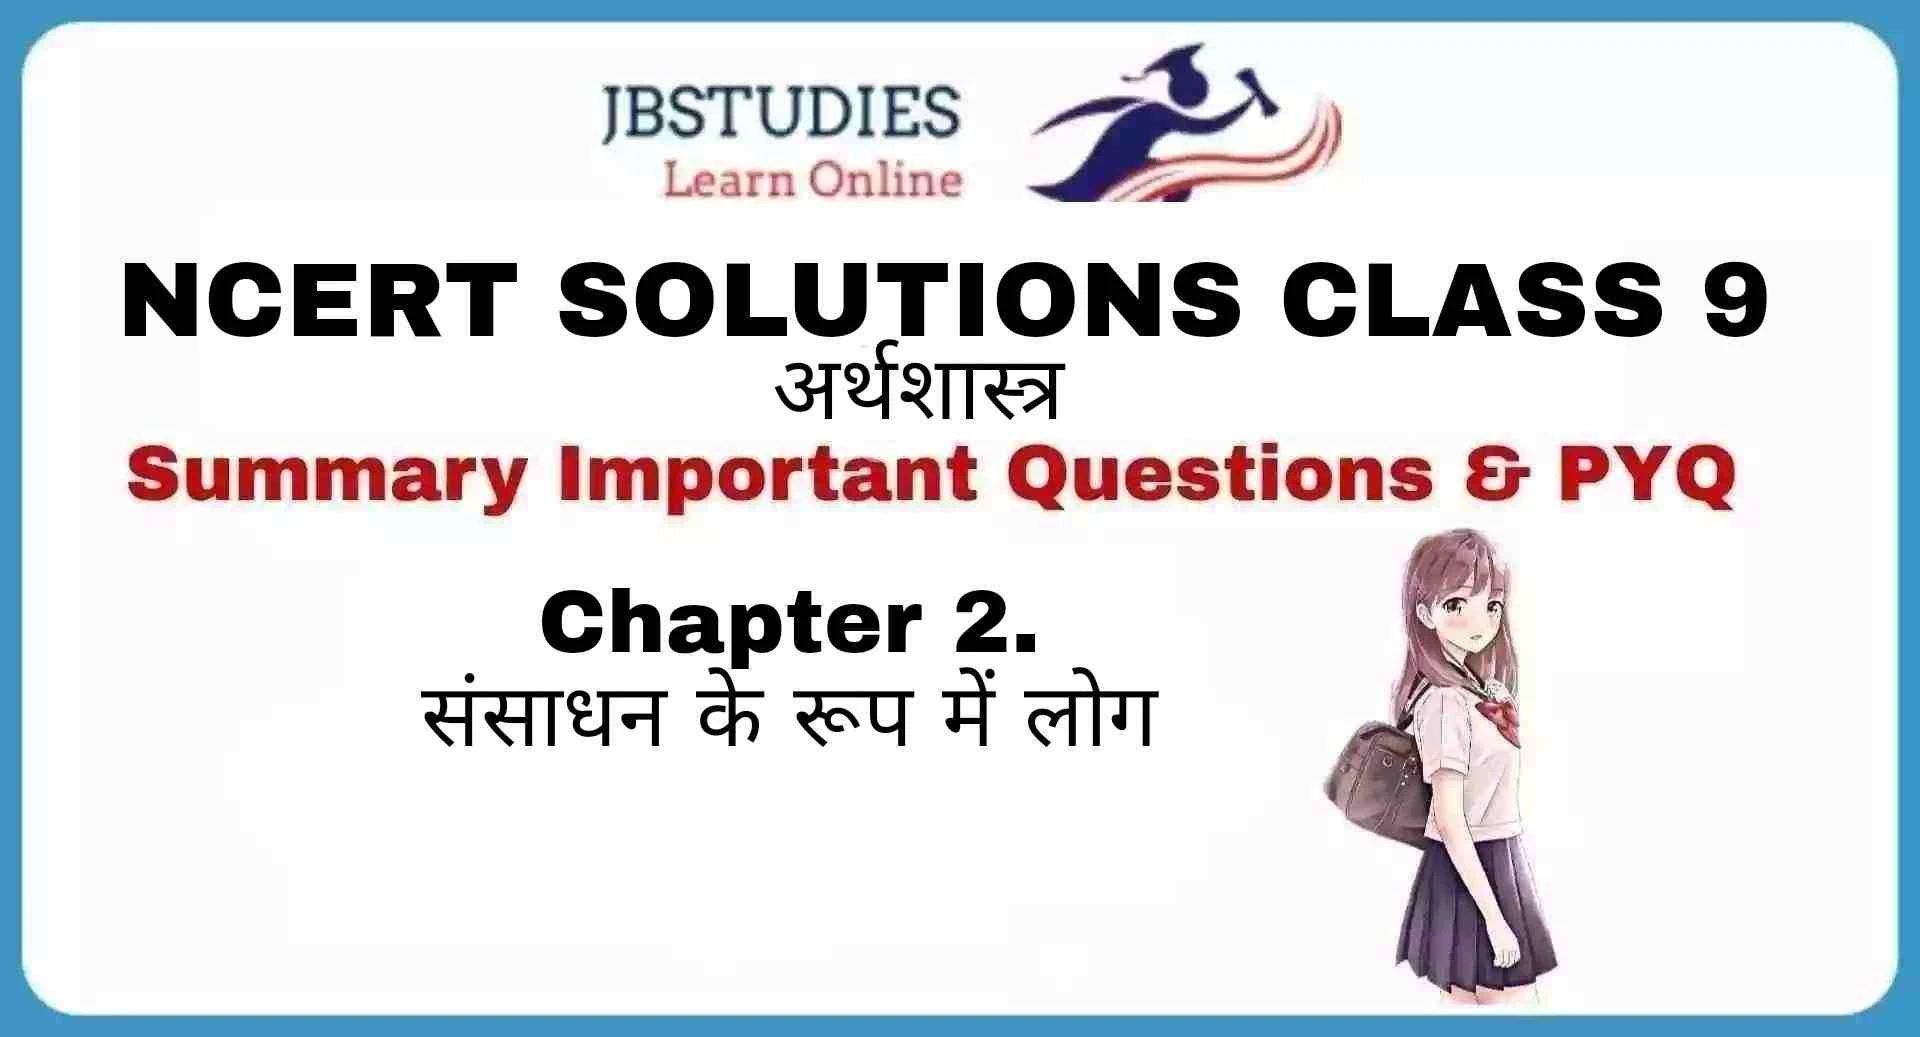 Solutions Class 9 अर्थशास्त्र Chapter-2 (संसाधन के रूप में लोग)